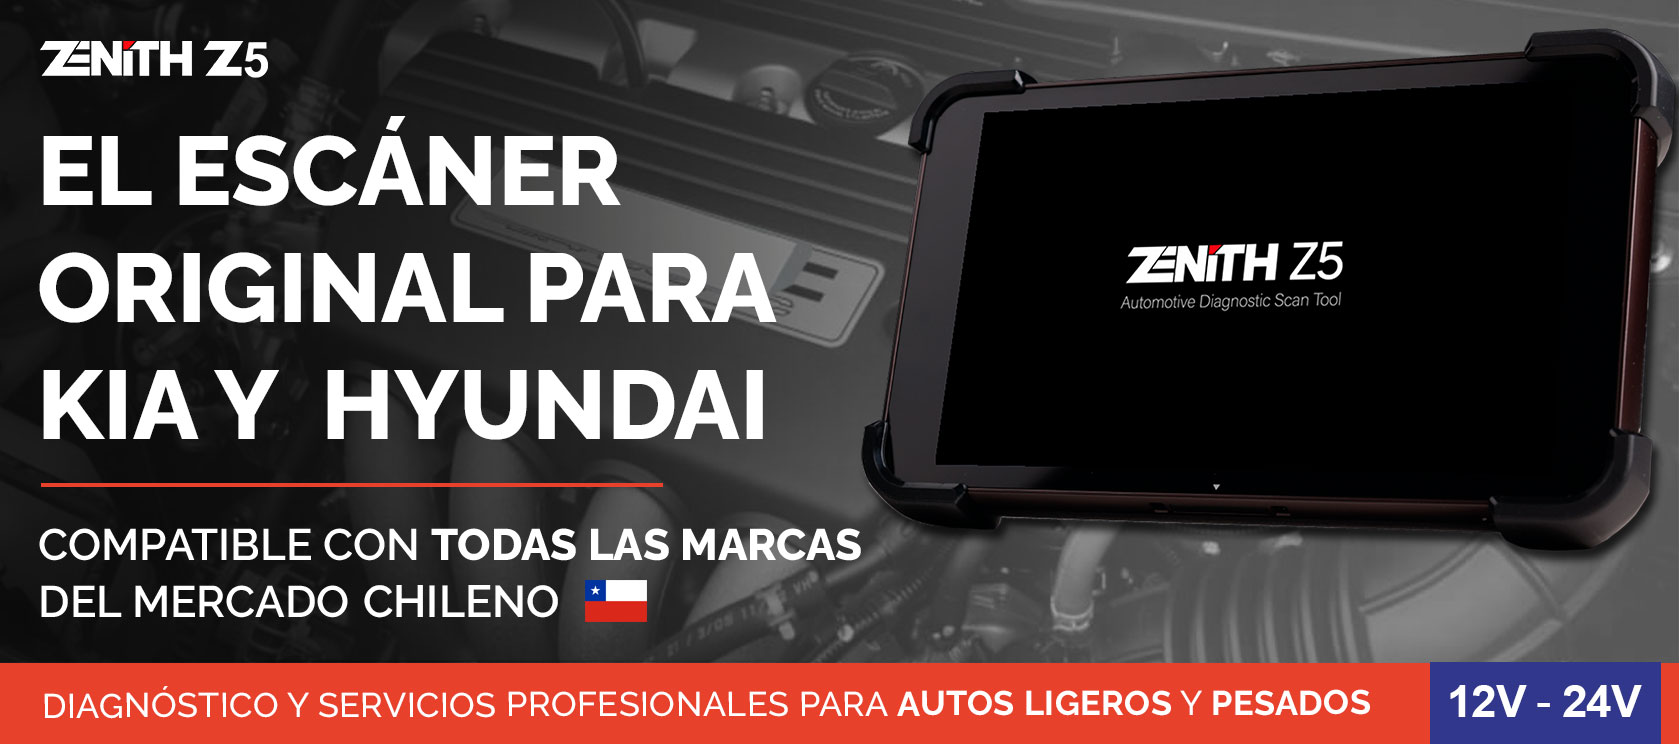 Scanner automotriz multimarca Zenith Z5